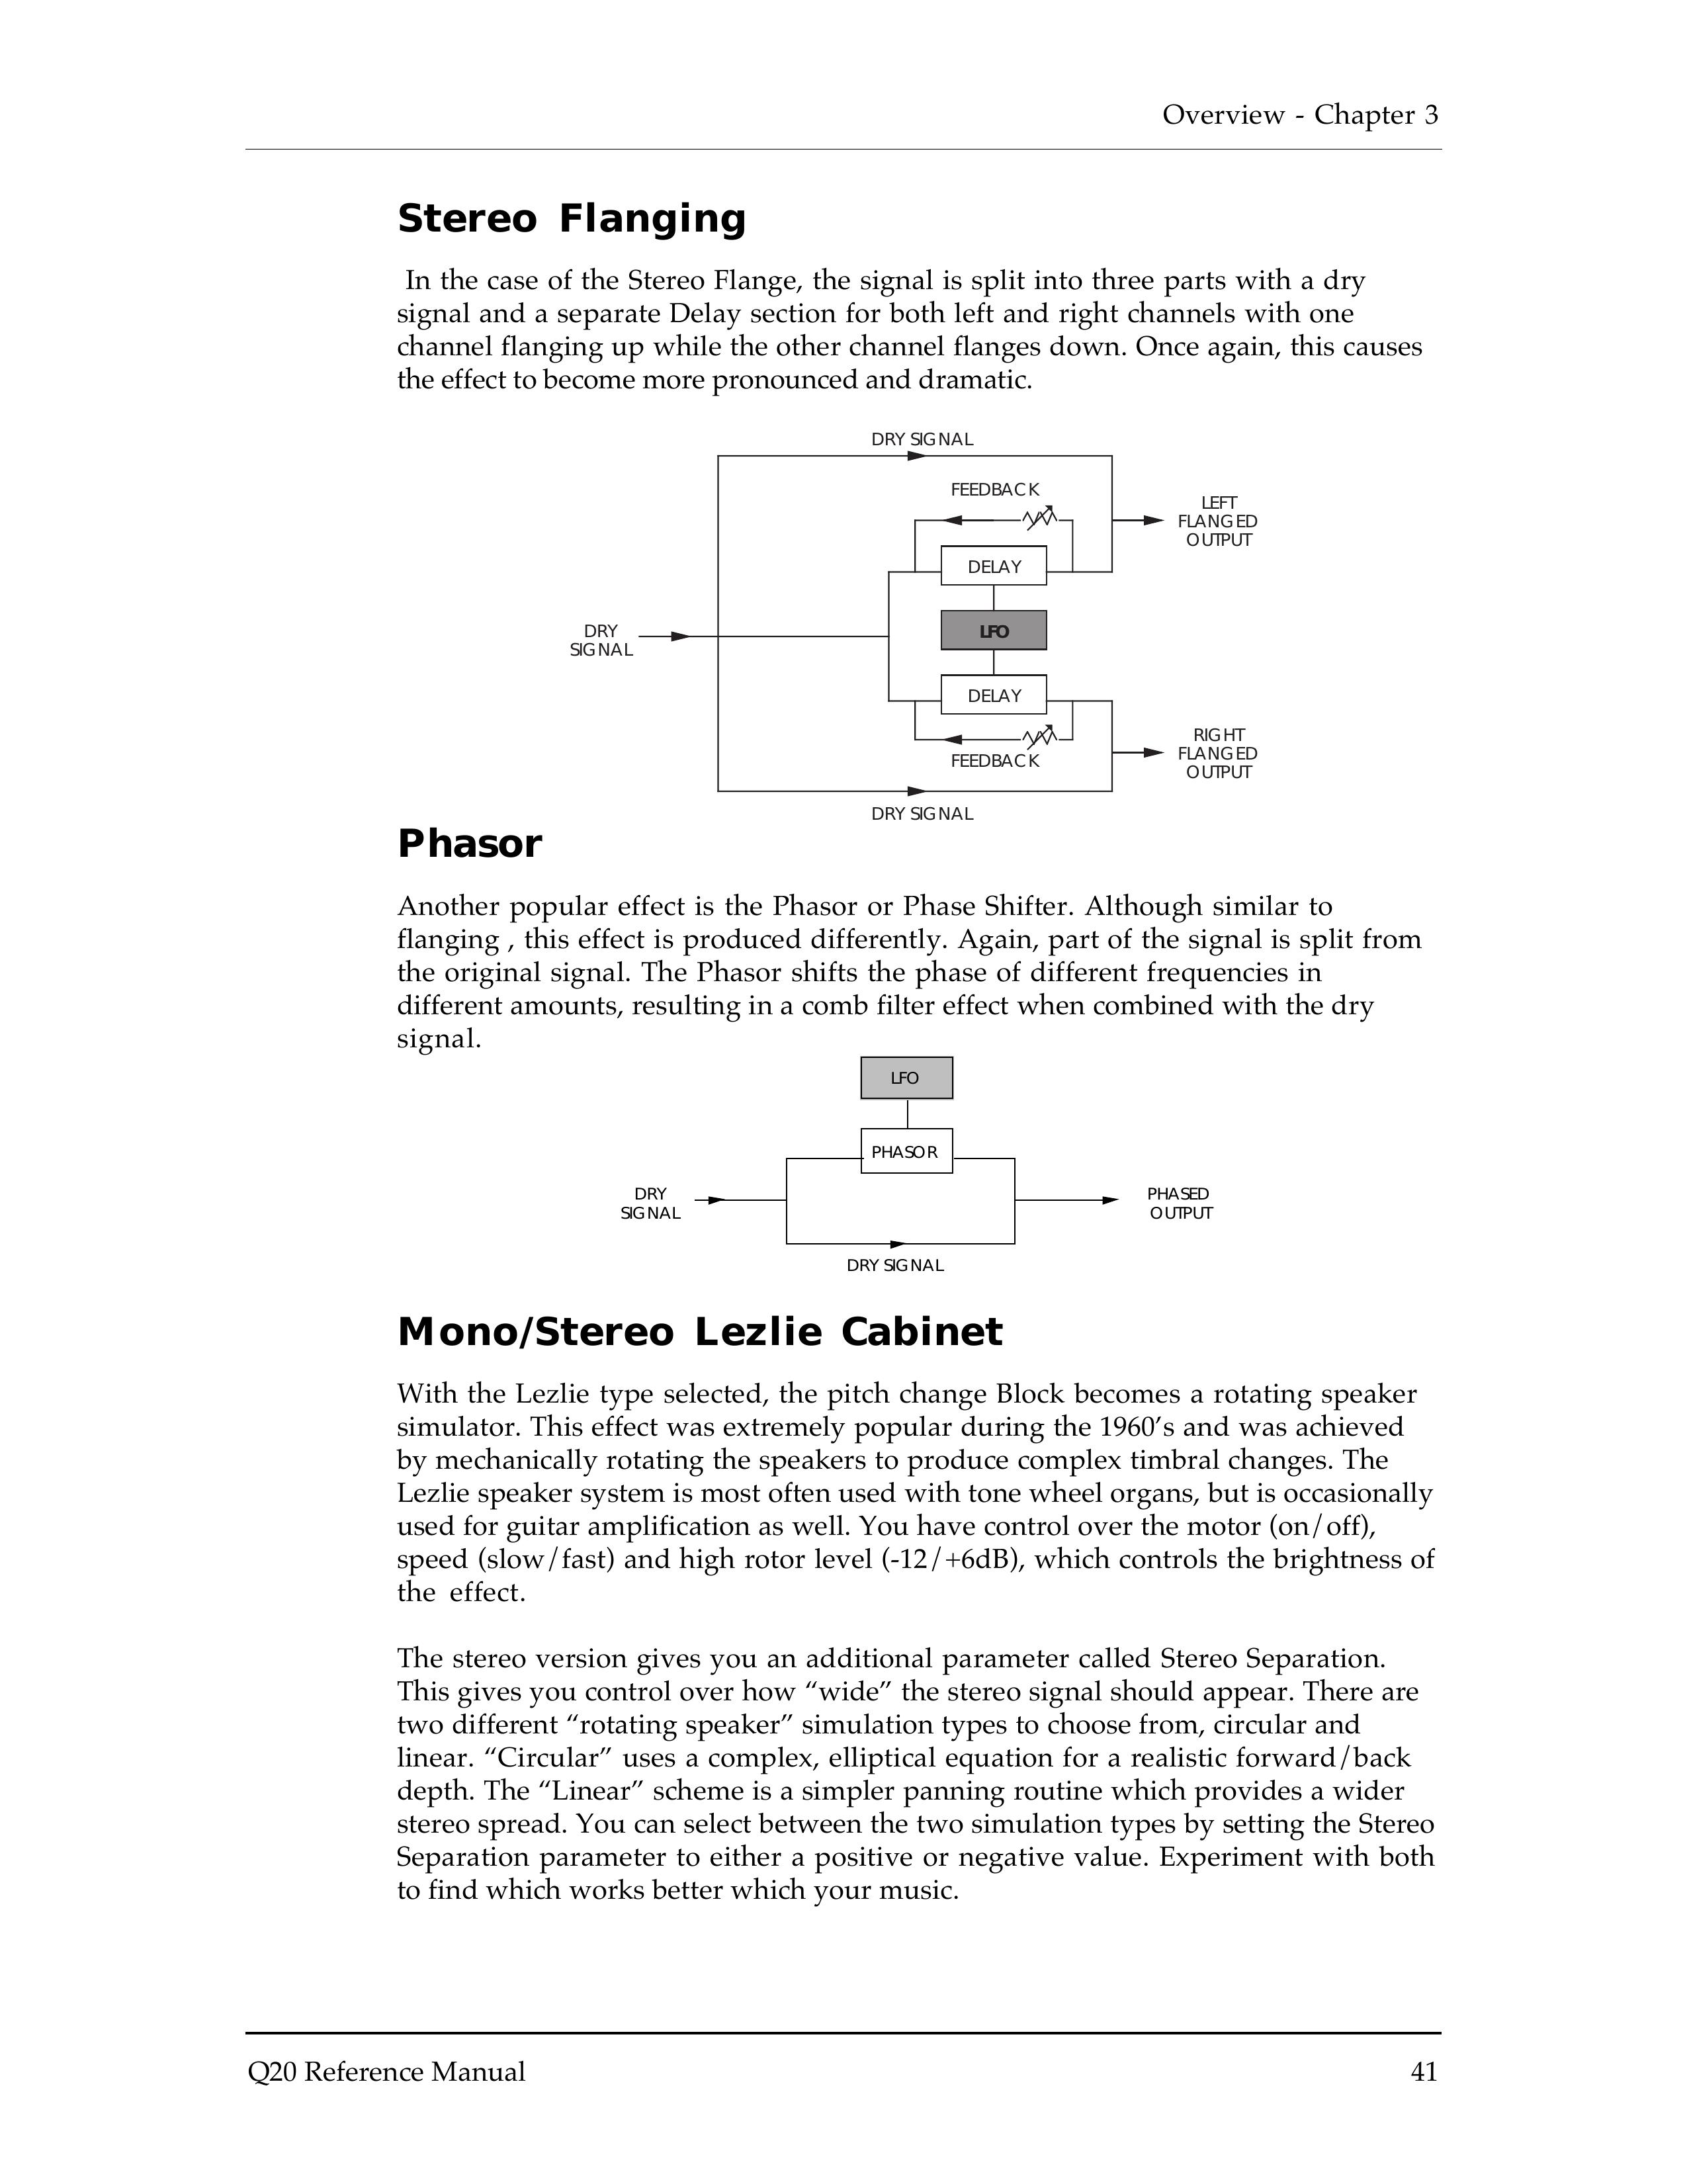 Alesis Q20 DJ Equipment User Manual (Page 43)